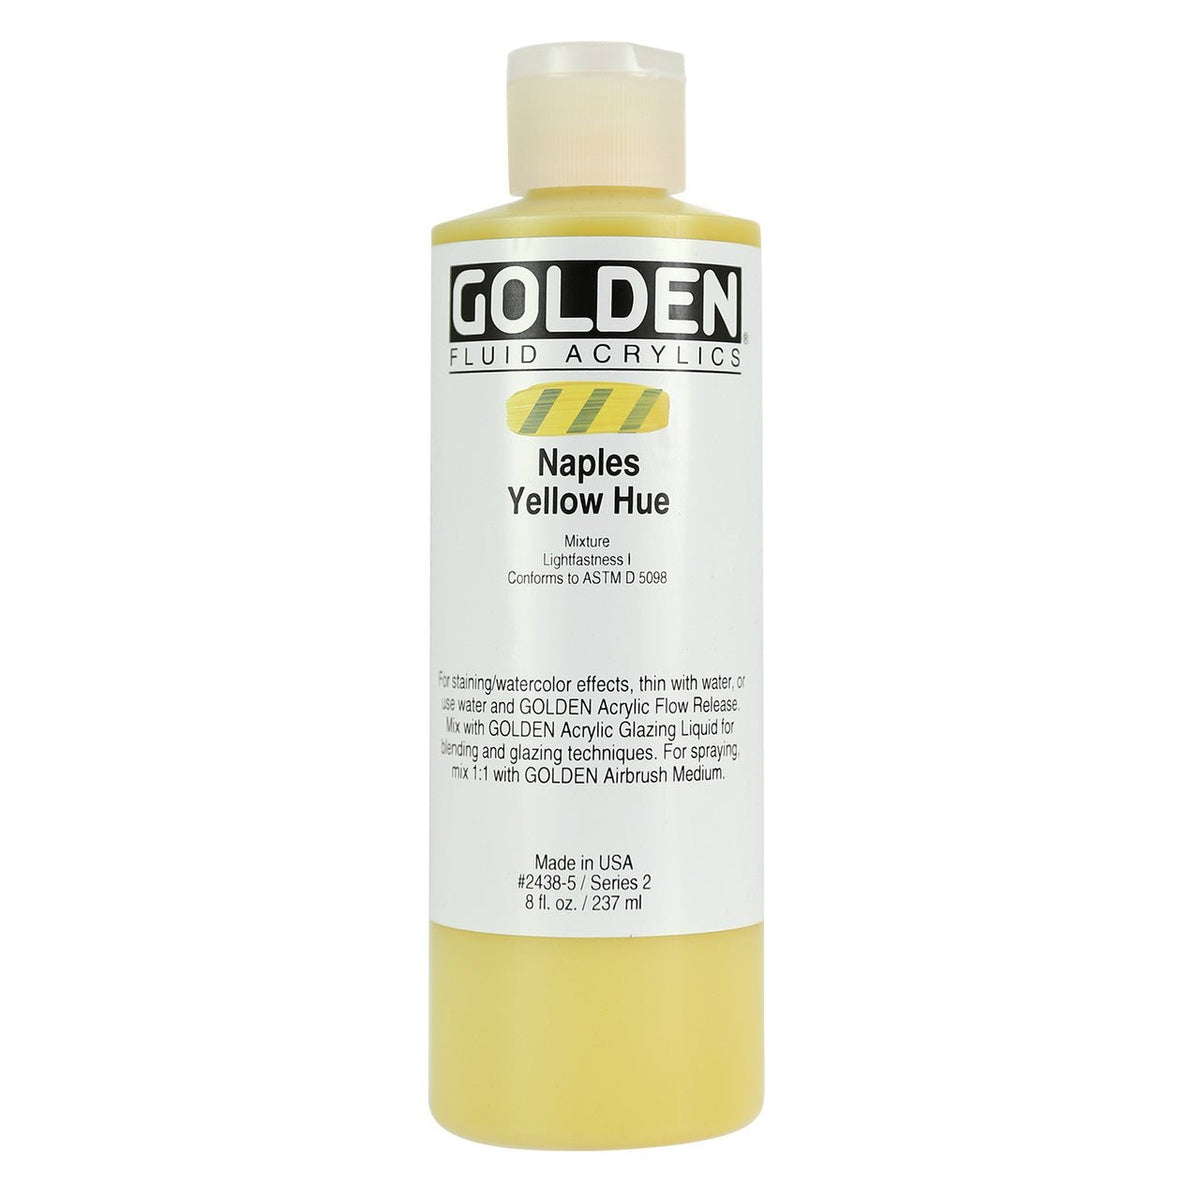 Golden Fluid Acrylic Naples Yellow Hue 8 oz - merriartist.com